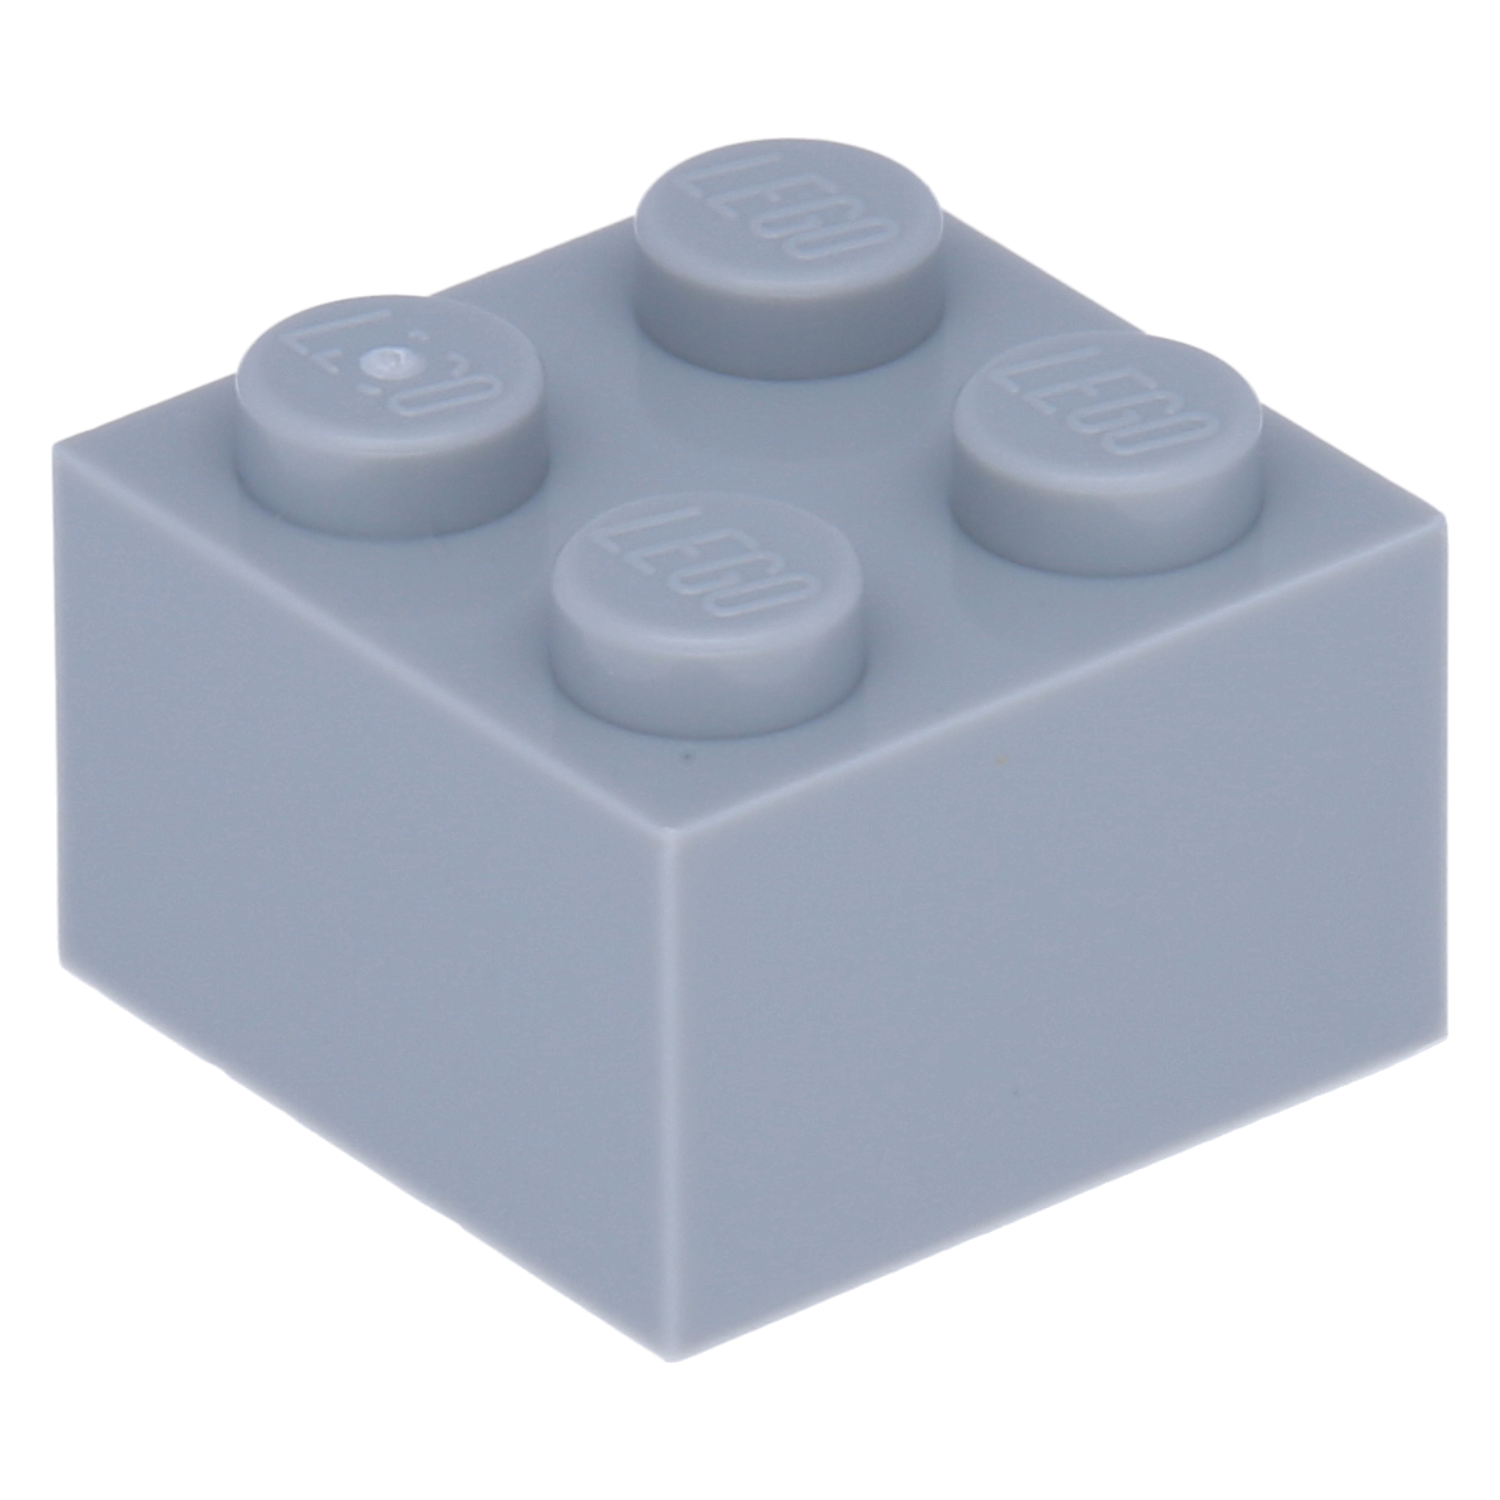 LEGO Bricks (standard) - 2 x 2